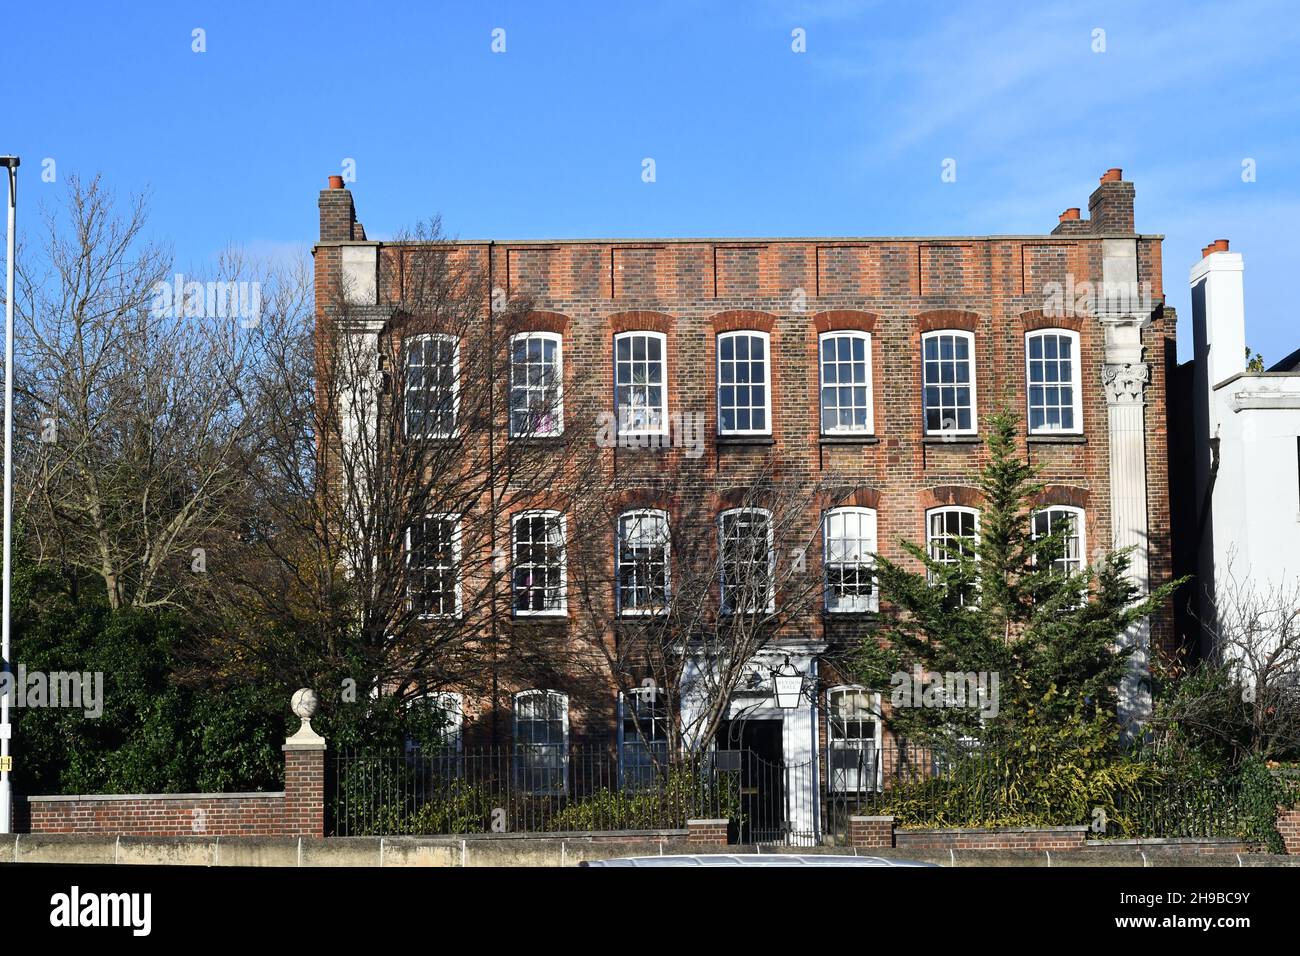 Grade 2 listed building, Reydon Hall, Three storeys brown brick with red dressing and sash windows Stock Photo